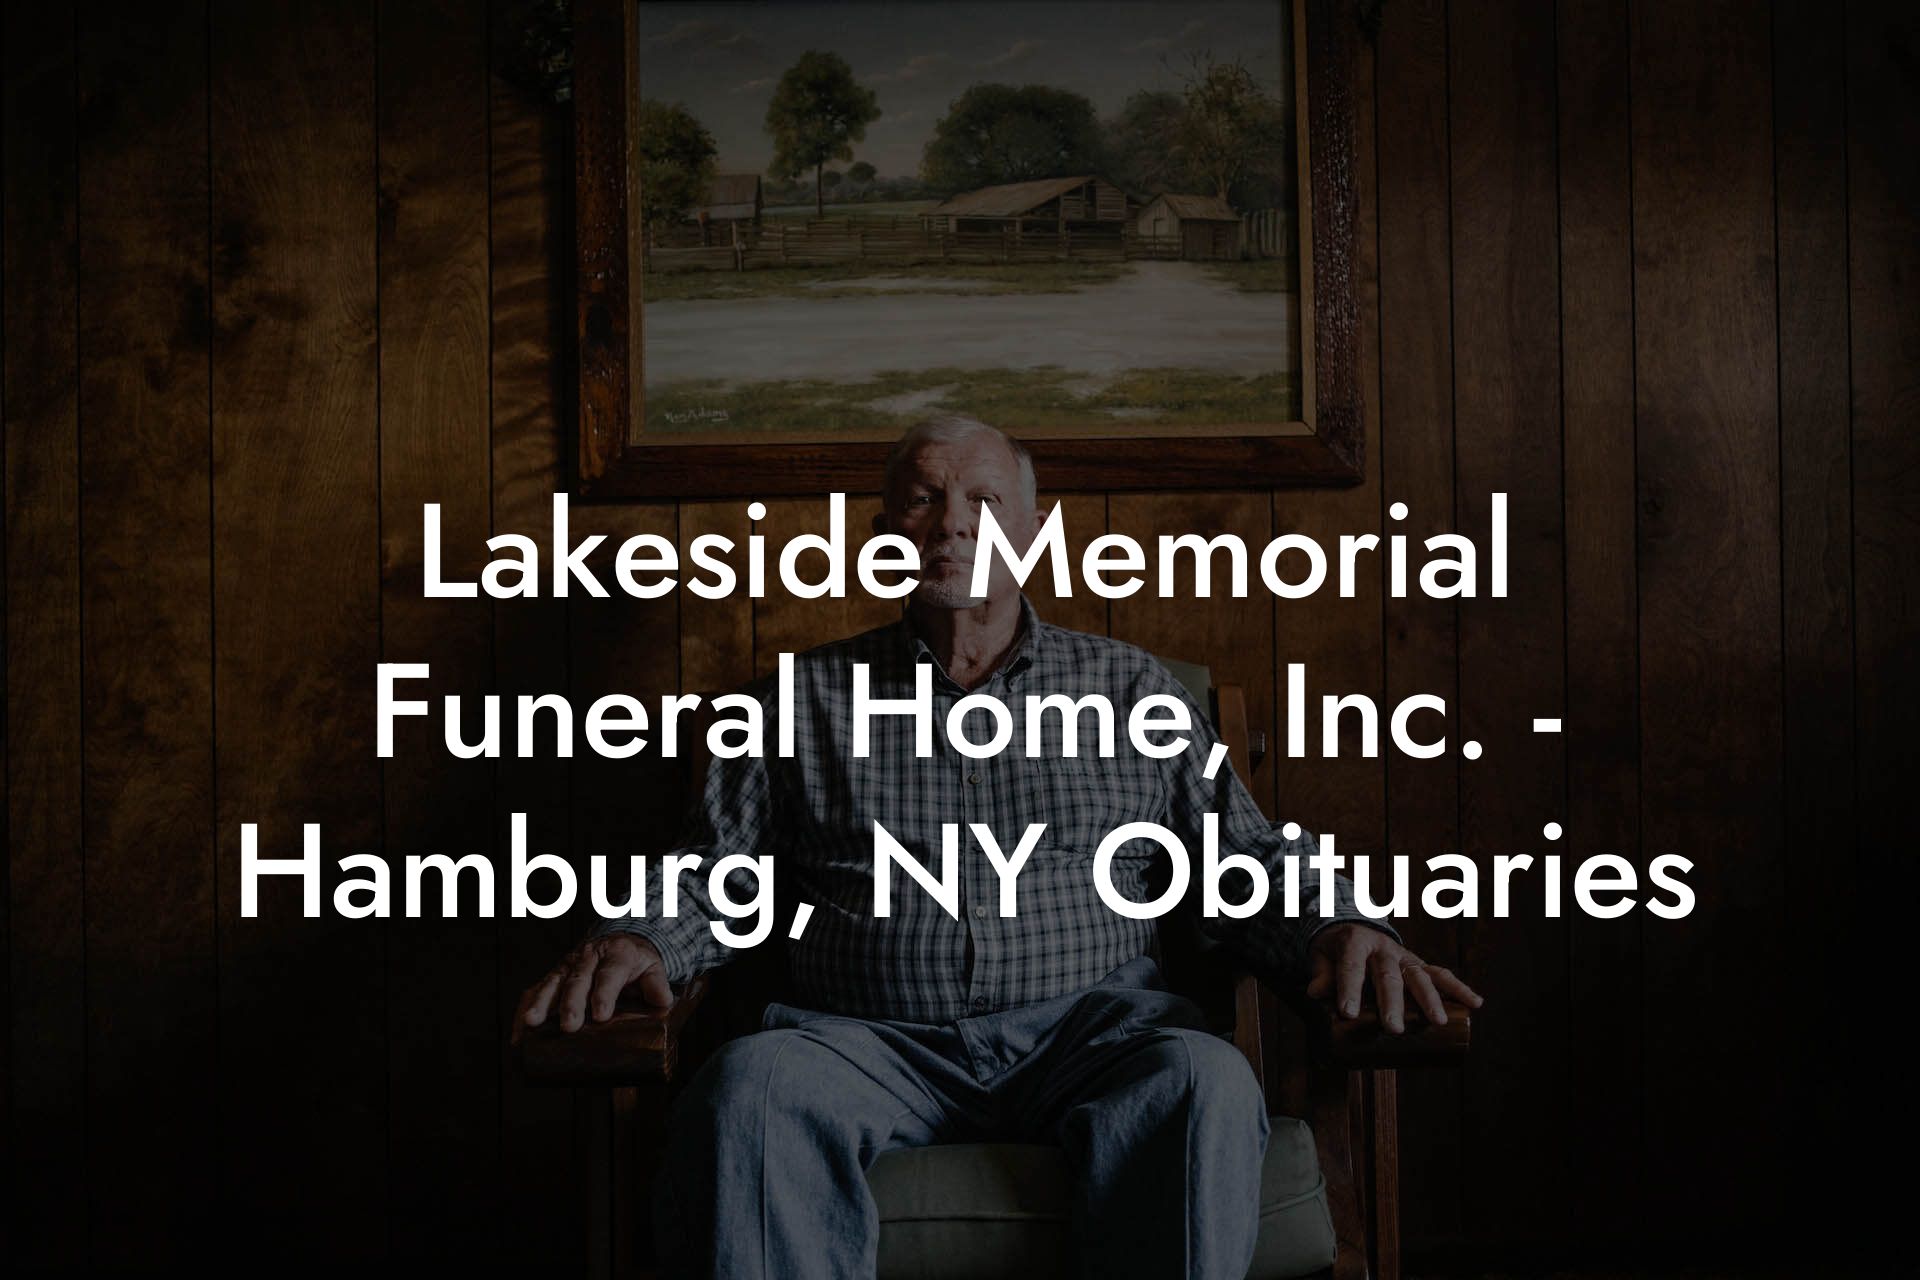 Lakeside Memorial Funeral Home, Inc. - Hamburg, NY Obituaries